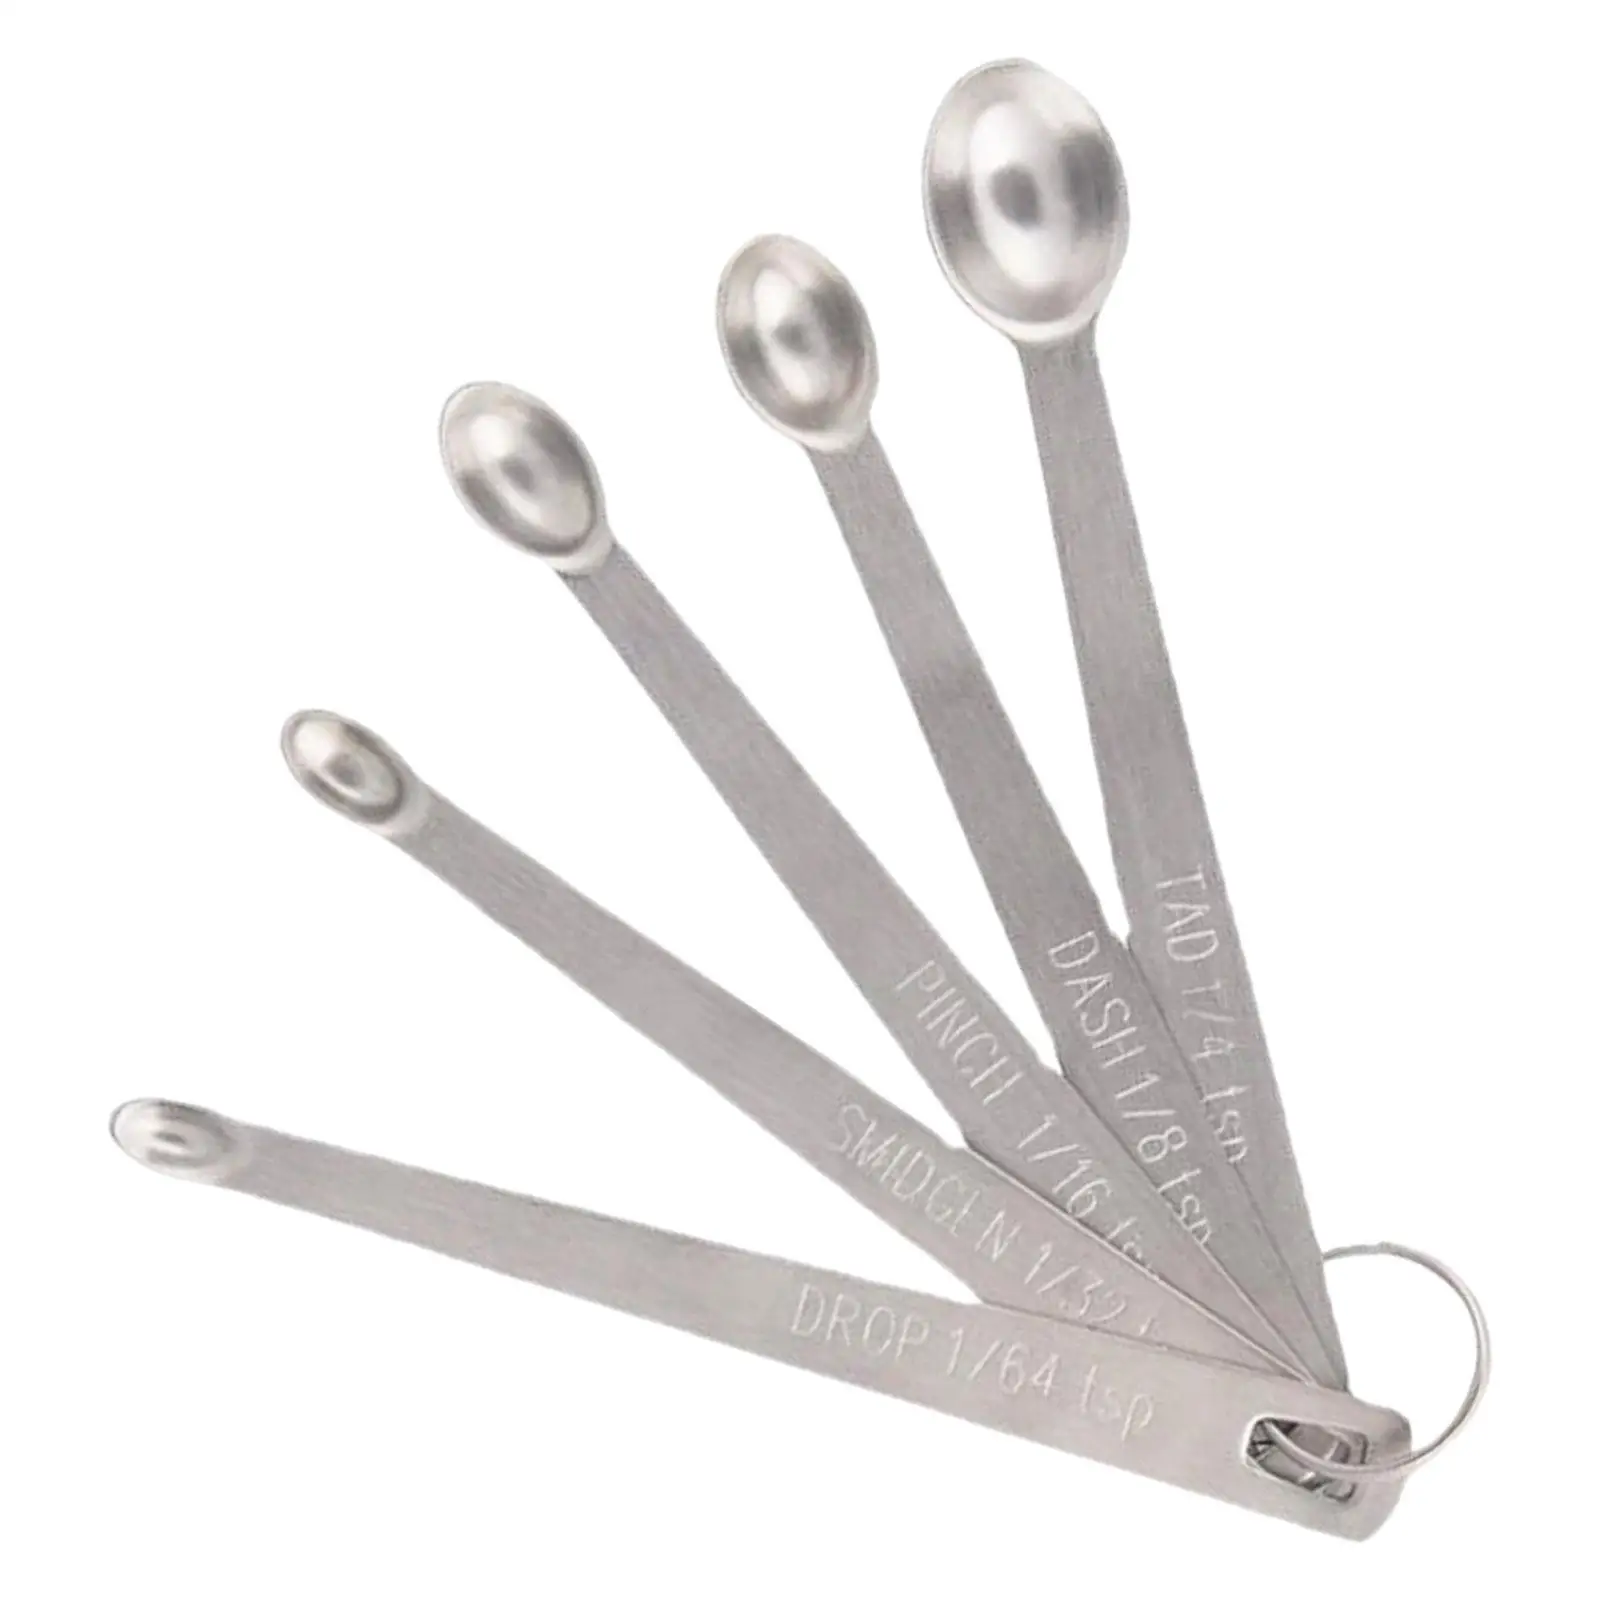 https://ae01.alicdn.com/kf/Saf8a337c946443c992ba2b9aa146f967N/5x-Stainless-Steel-for-Measuring-Dry-and-Liquid-Mini-Measuring-Spoon-Set.jpg